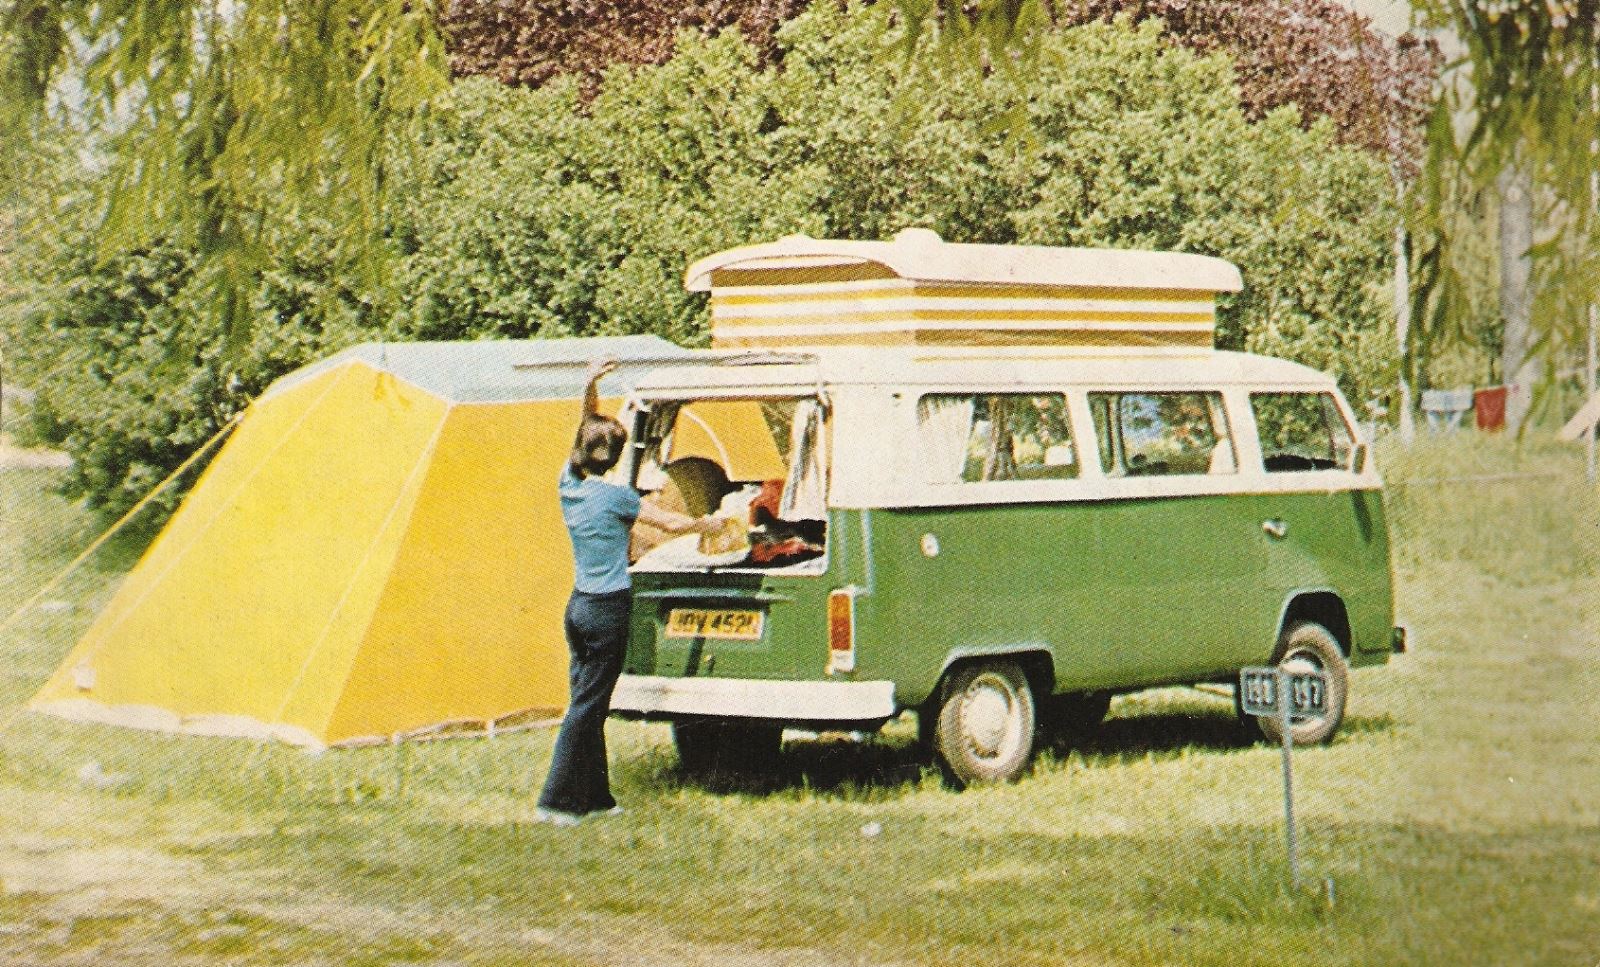 A VW Campervan